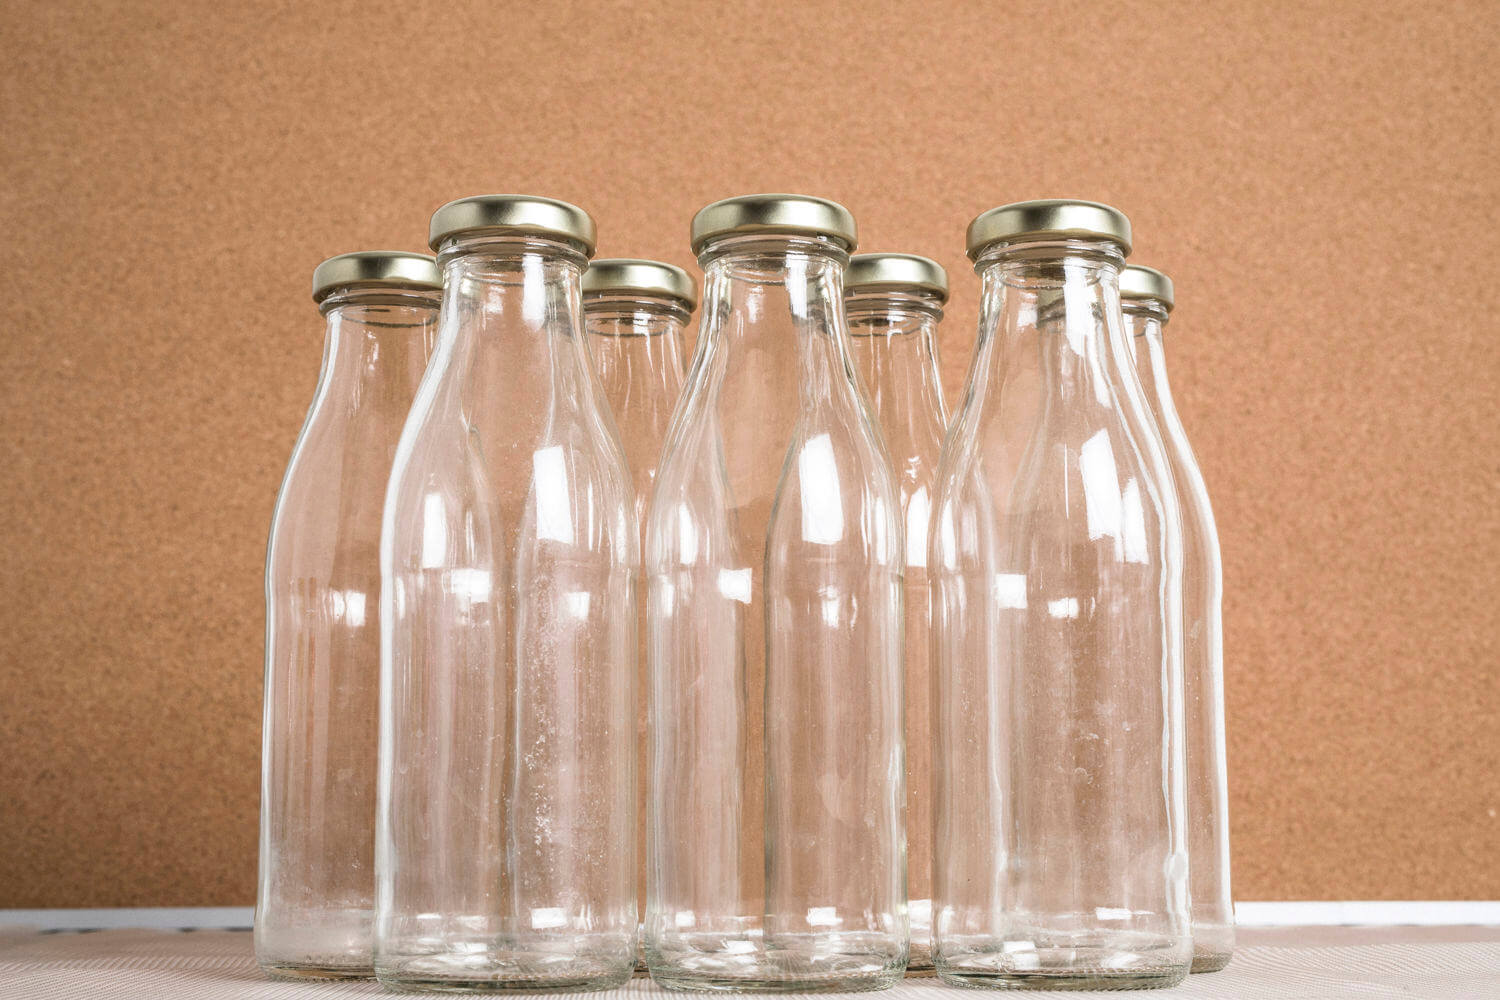 Group of reusable glass bottles